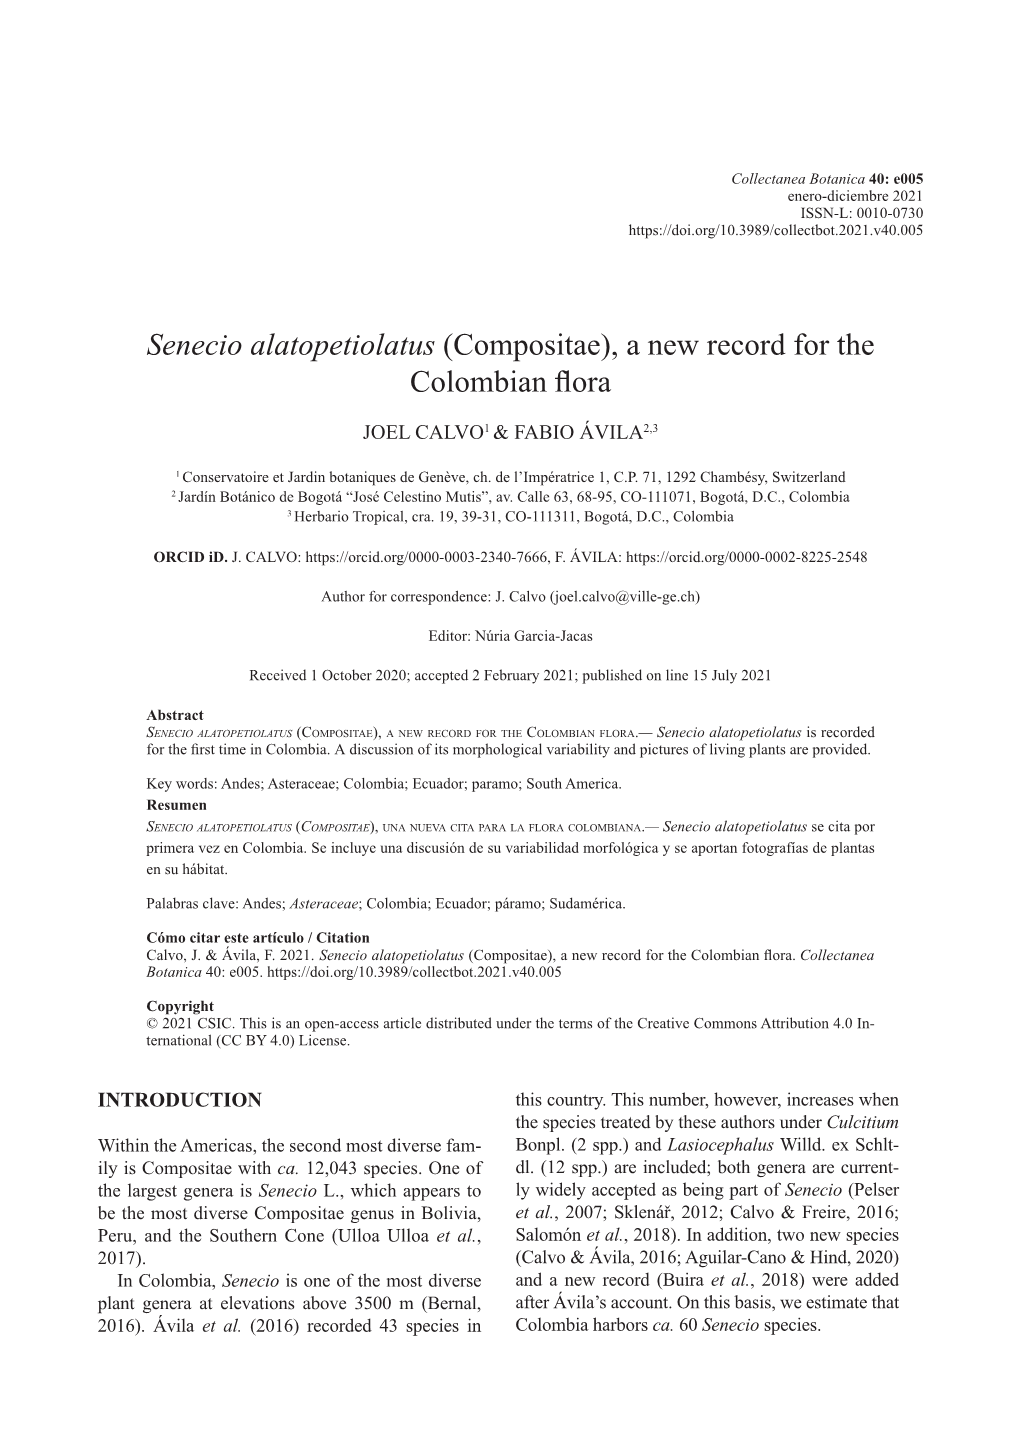 'Senecio Alatopetiolatus' (Compositae), a New Record for the Colombian Flora